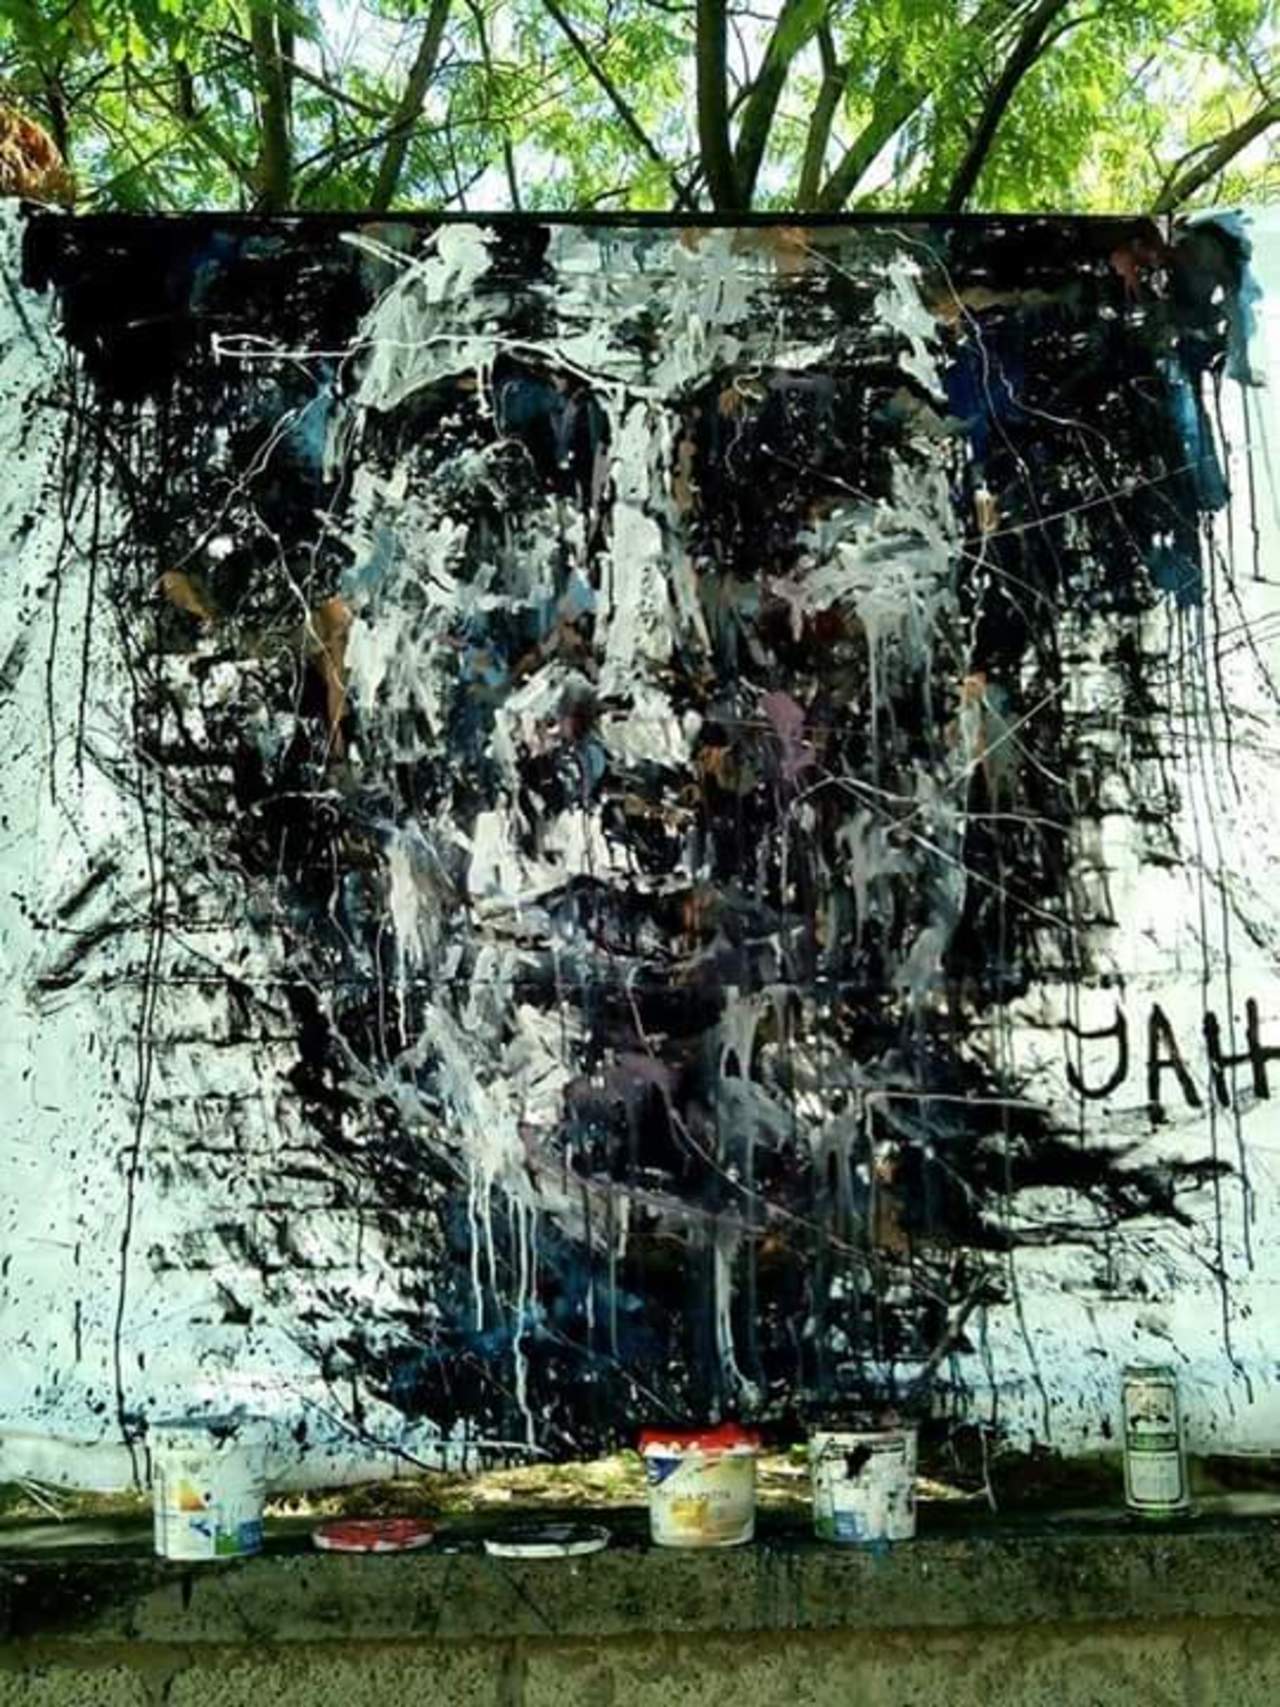 RT GuilleMGreco: Cool Man...
By Jah.
In Amsterdam.
#Art #Graffiti #Mural #Streetart http://t.co/OvYdXE5AEO https://goo.gl/7kifqw